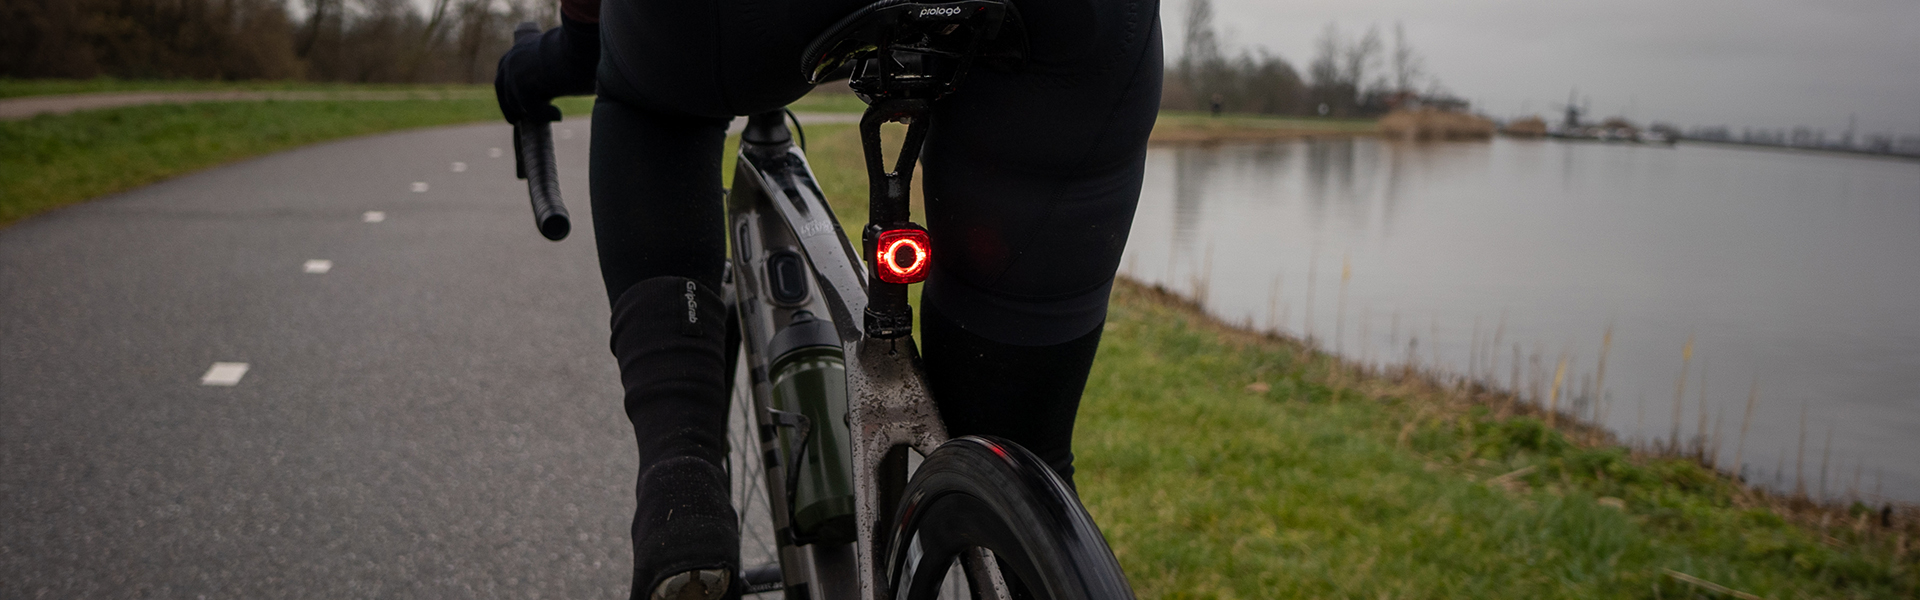 Sate-lite ebike light  StVZO ISO6742-1 eletric bike tail light with StVZO Z ECE reflector mount on Carrier 6-48V